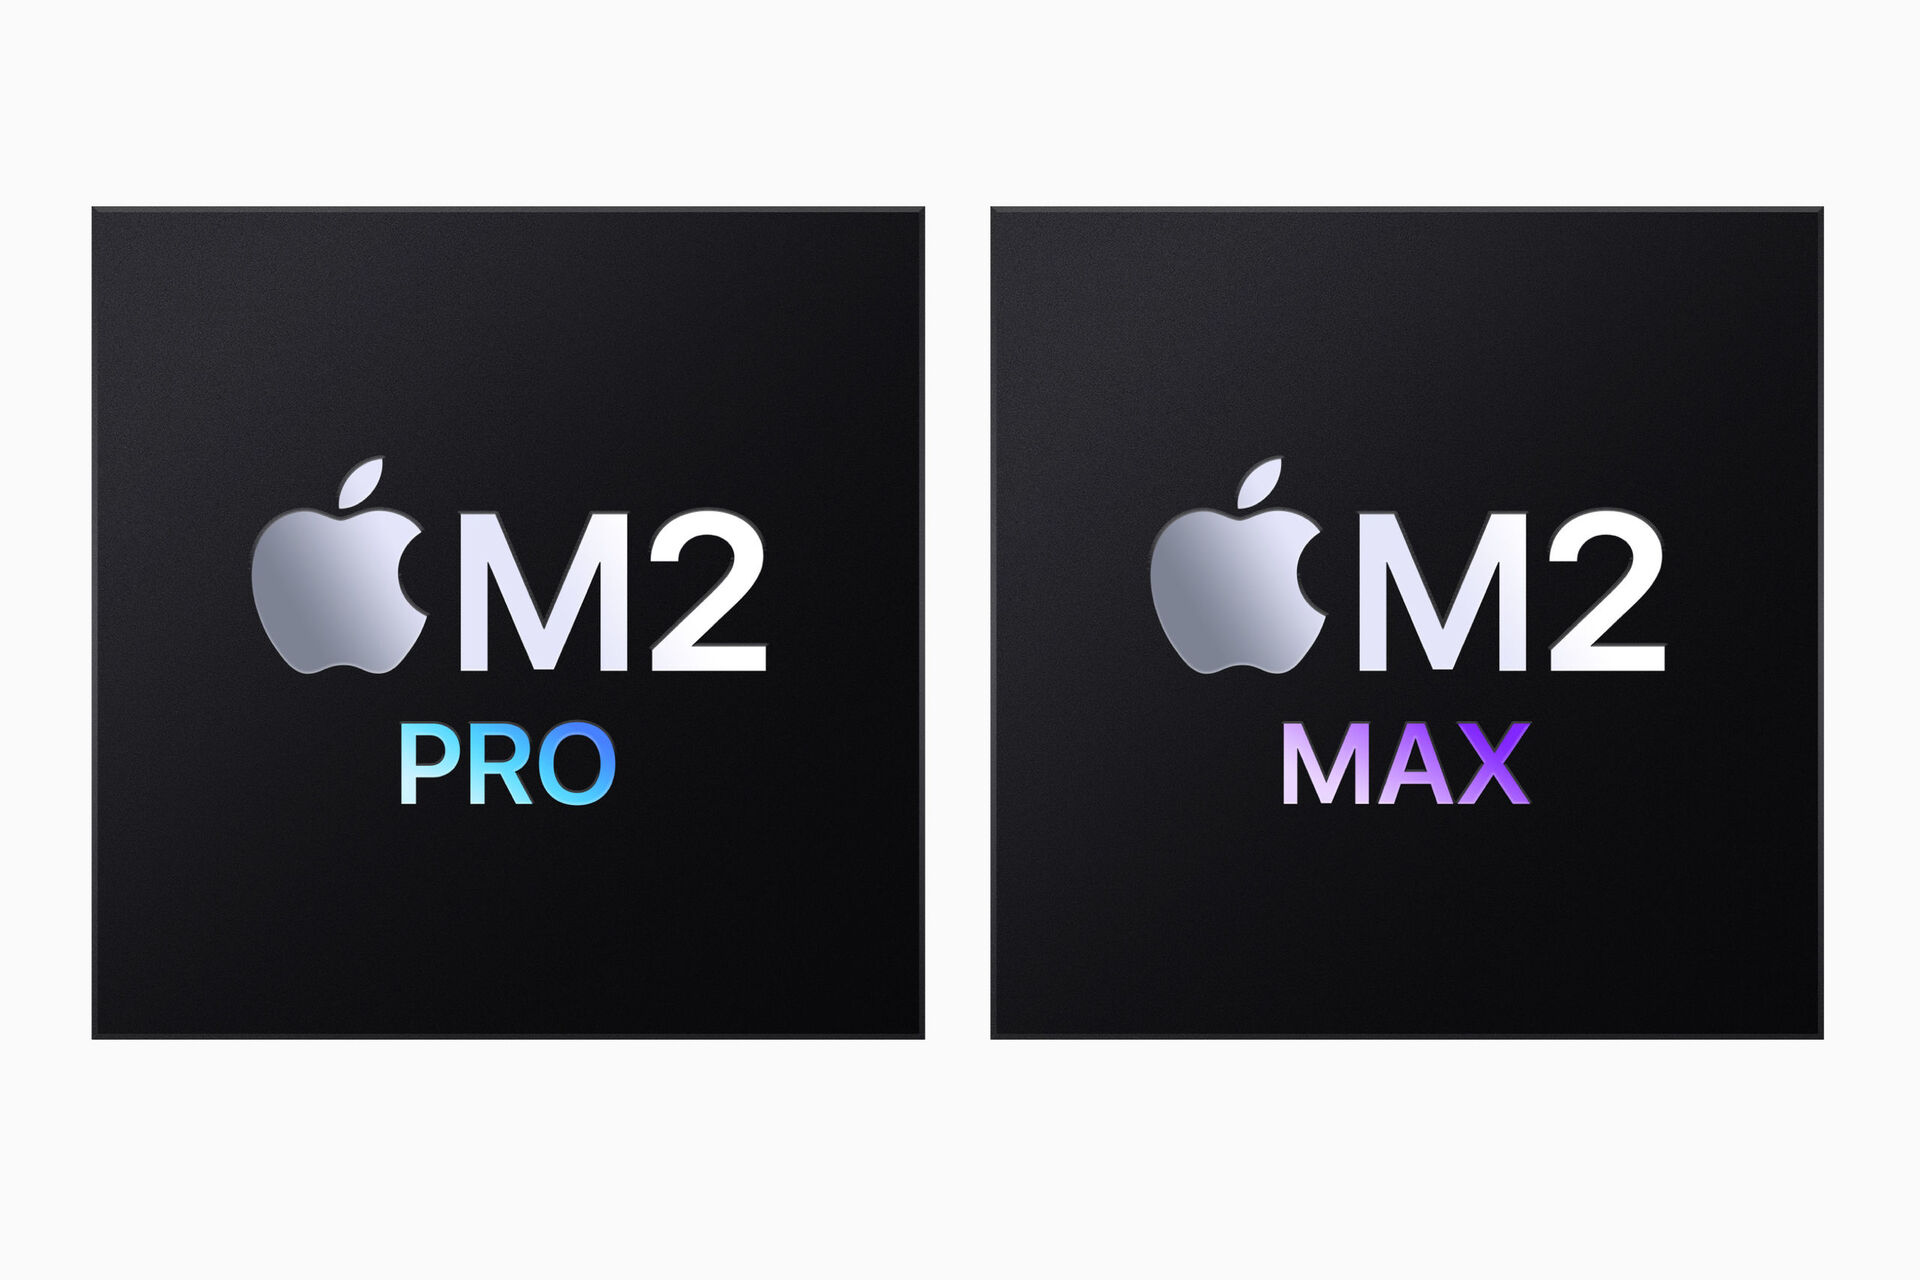 Apple M2 Pro a M2 Max